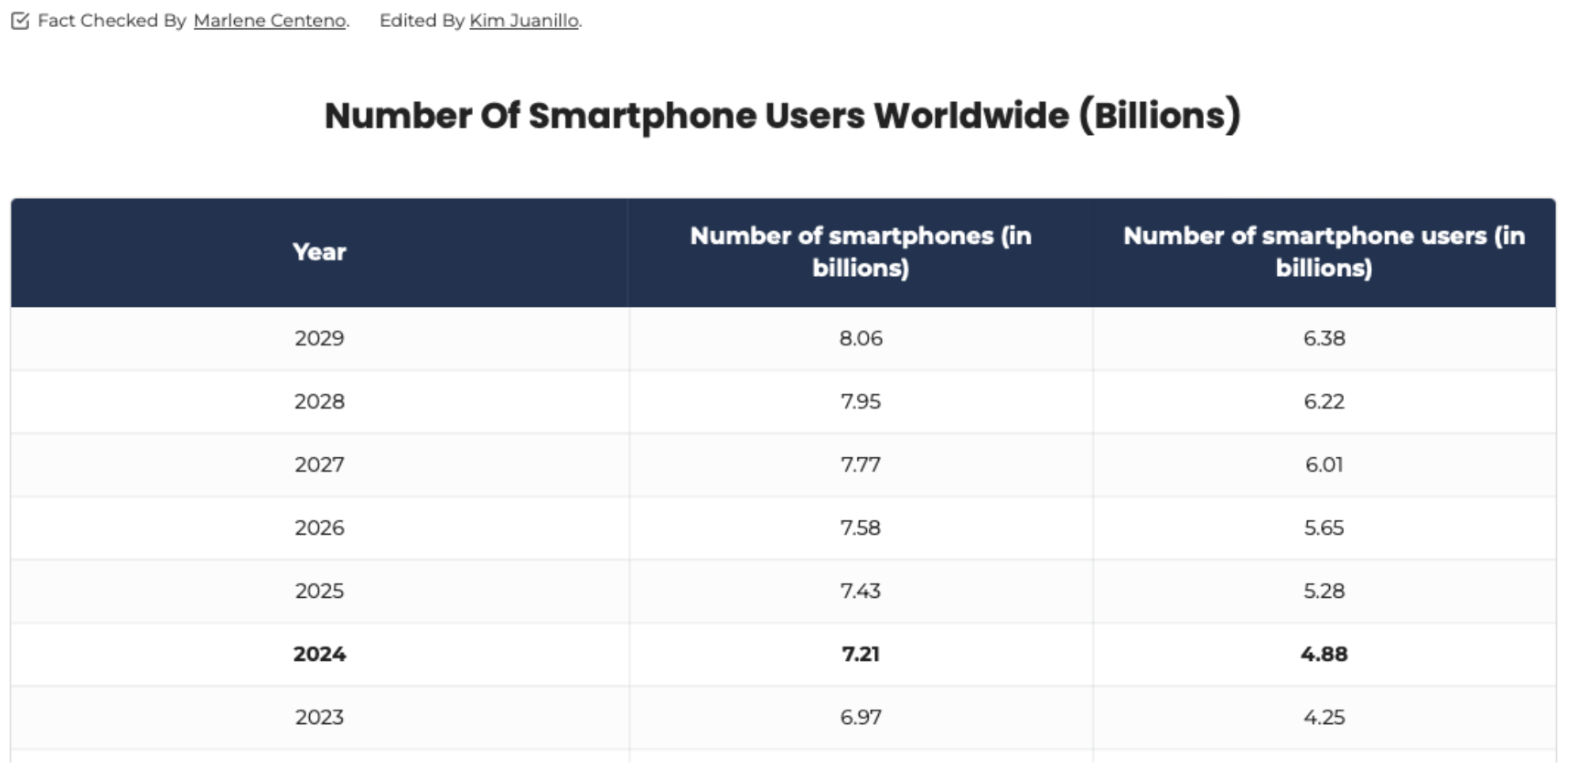 Number of Smartphone users worldwide